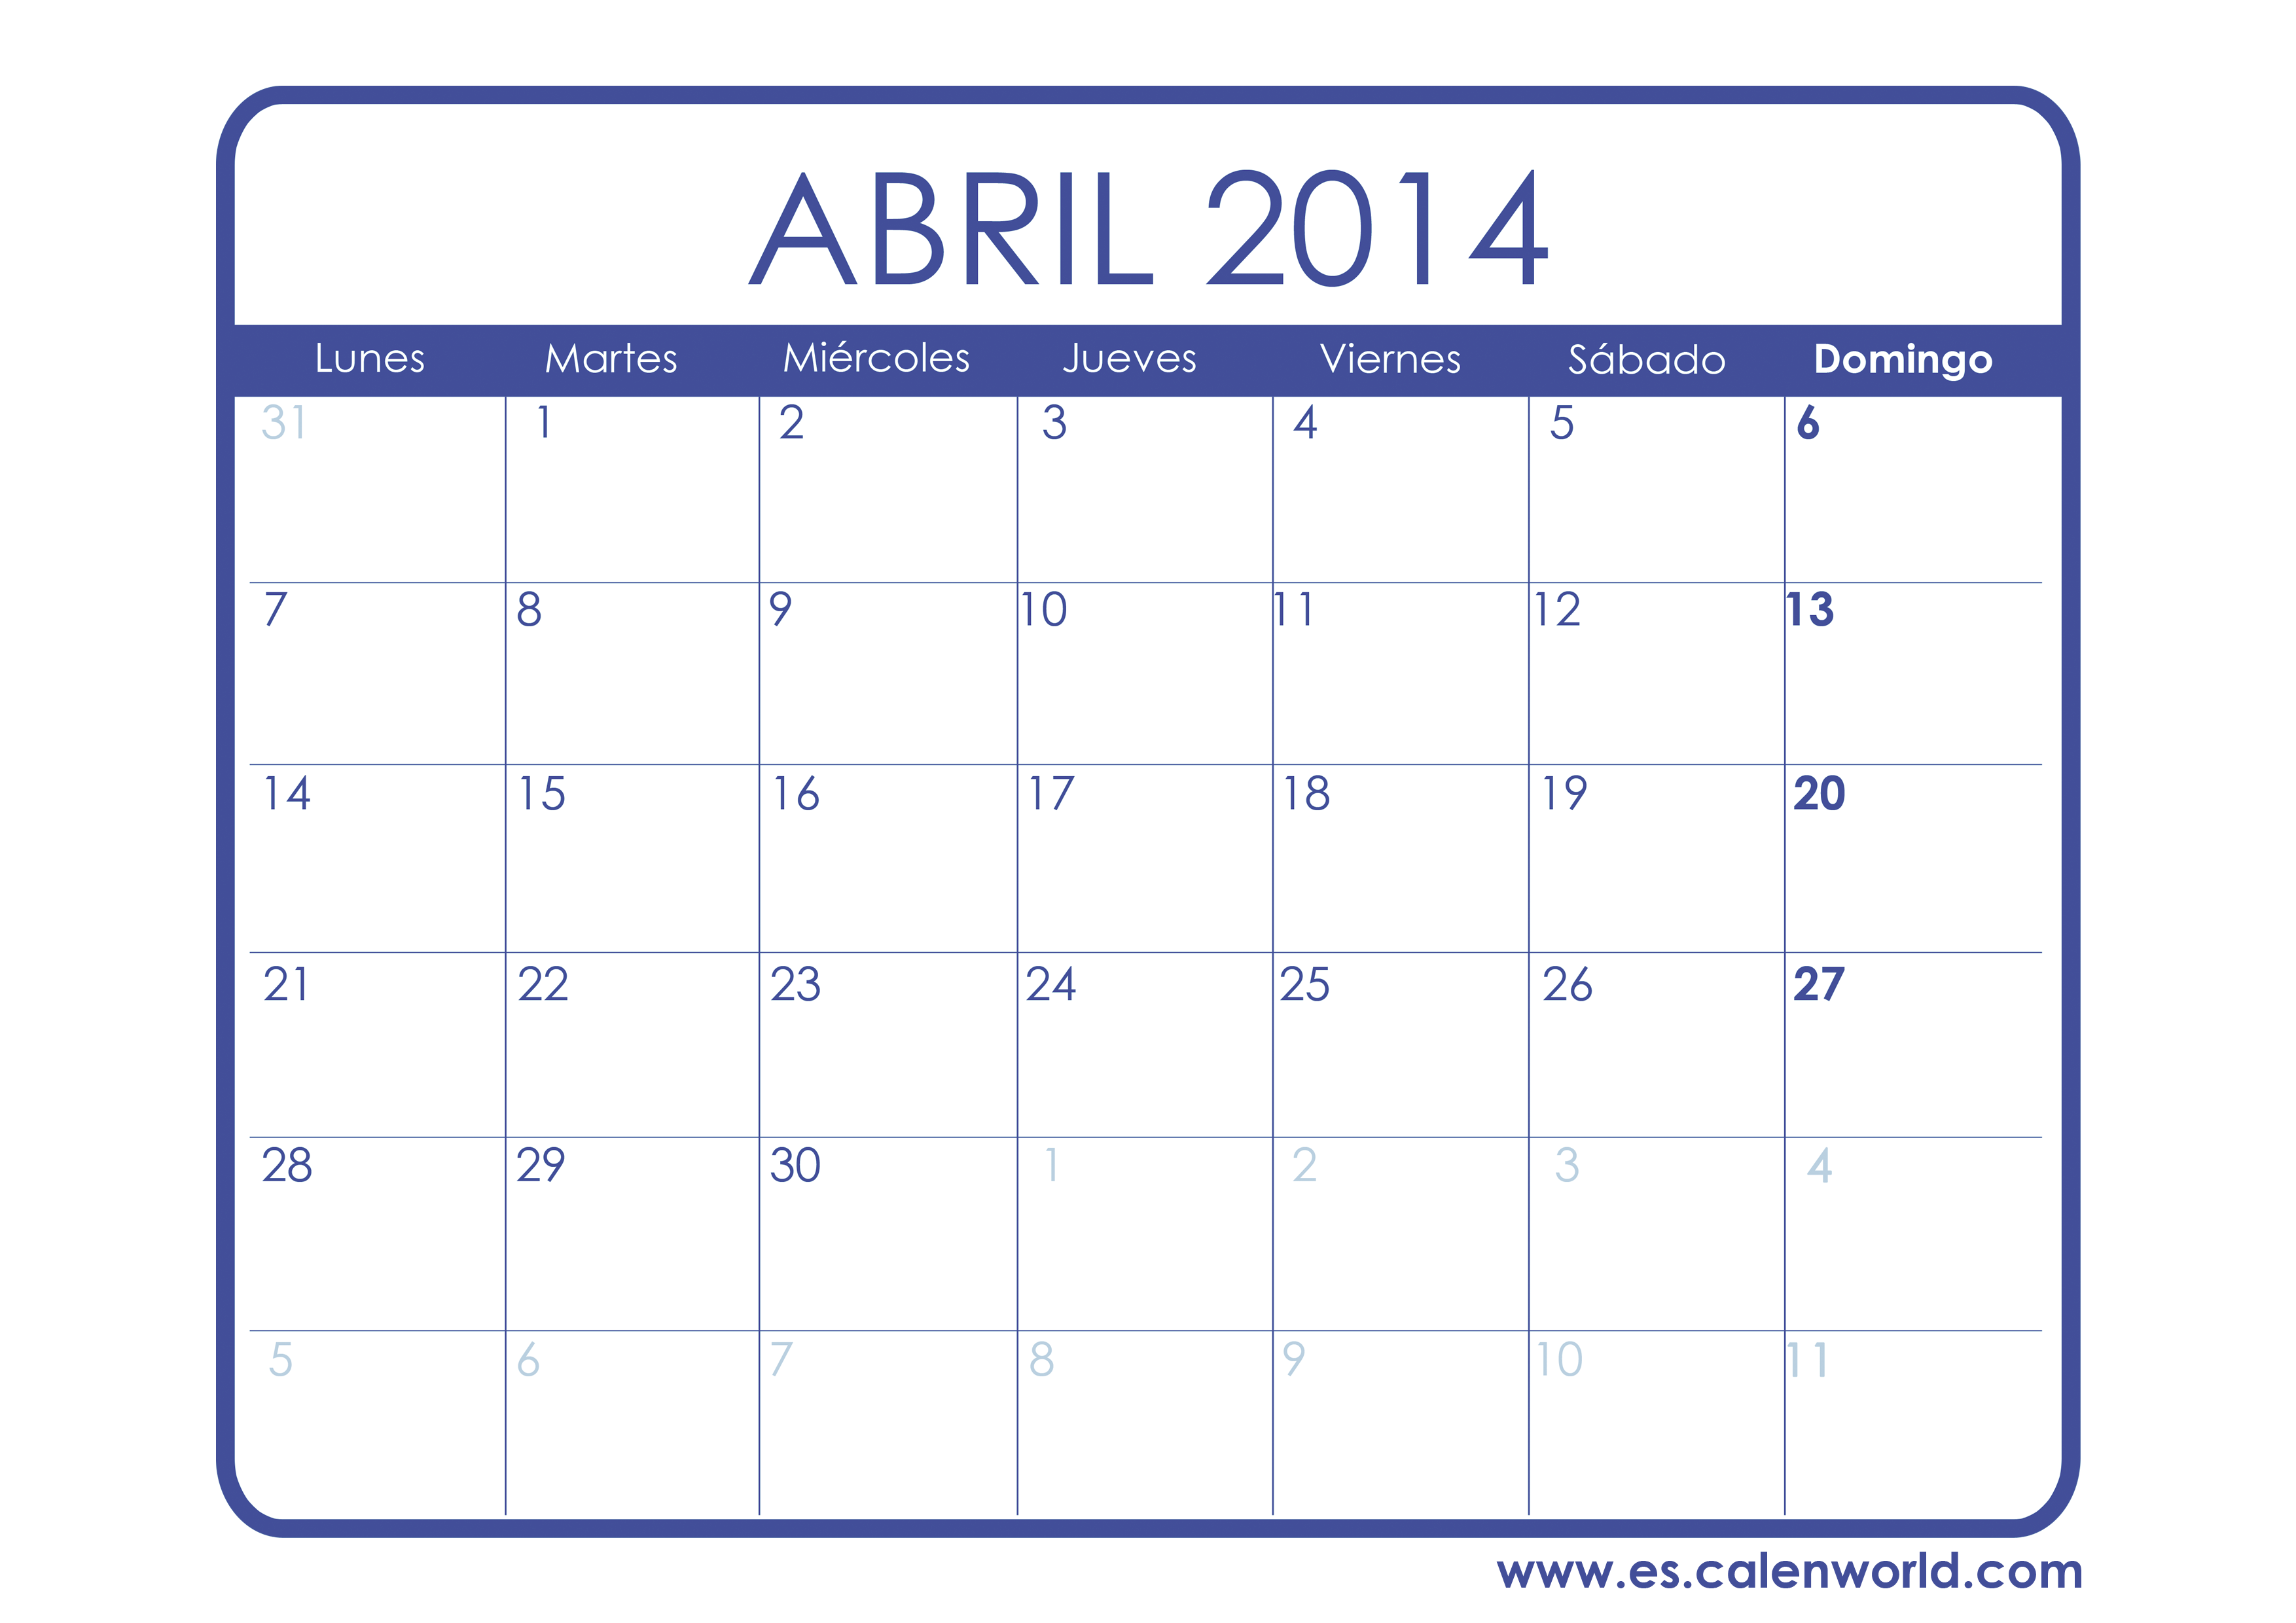 Calendario Abril 2014 para imprimir